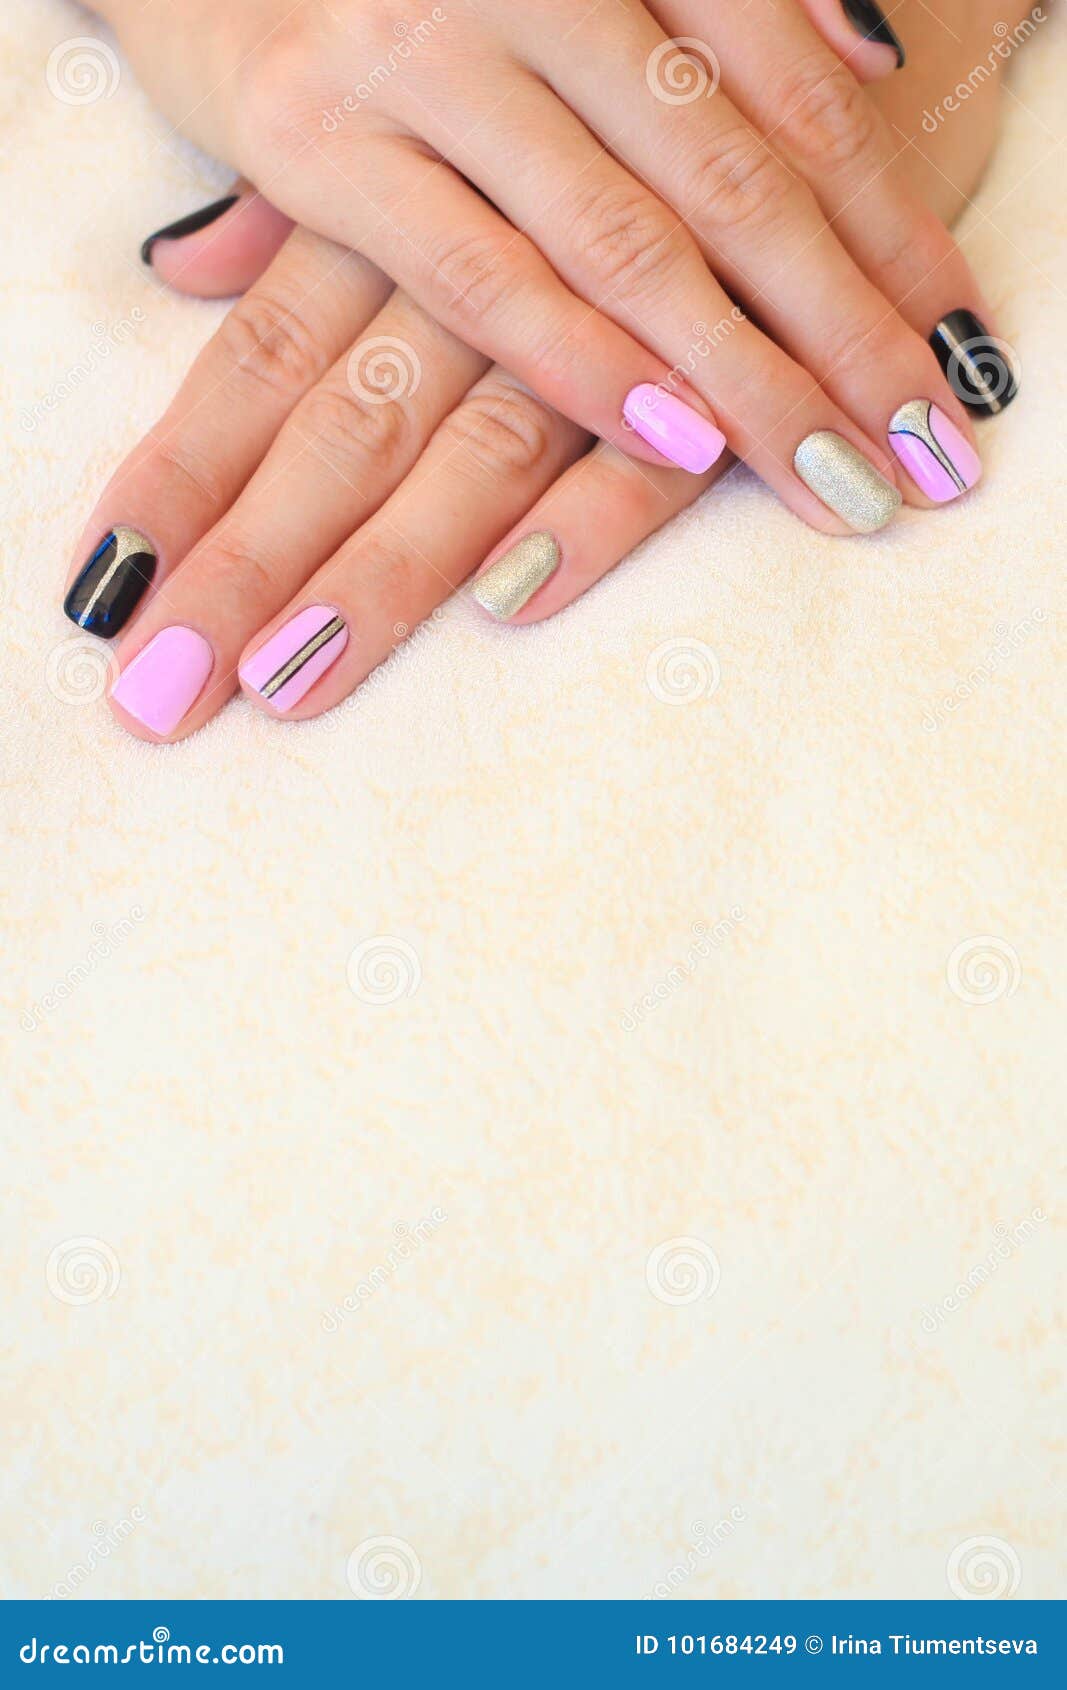 Pinterest | Nails design with rhinestones, Beauty nails design, Stylish  nails art